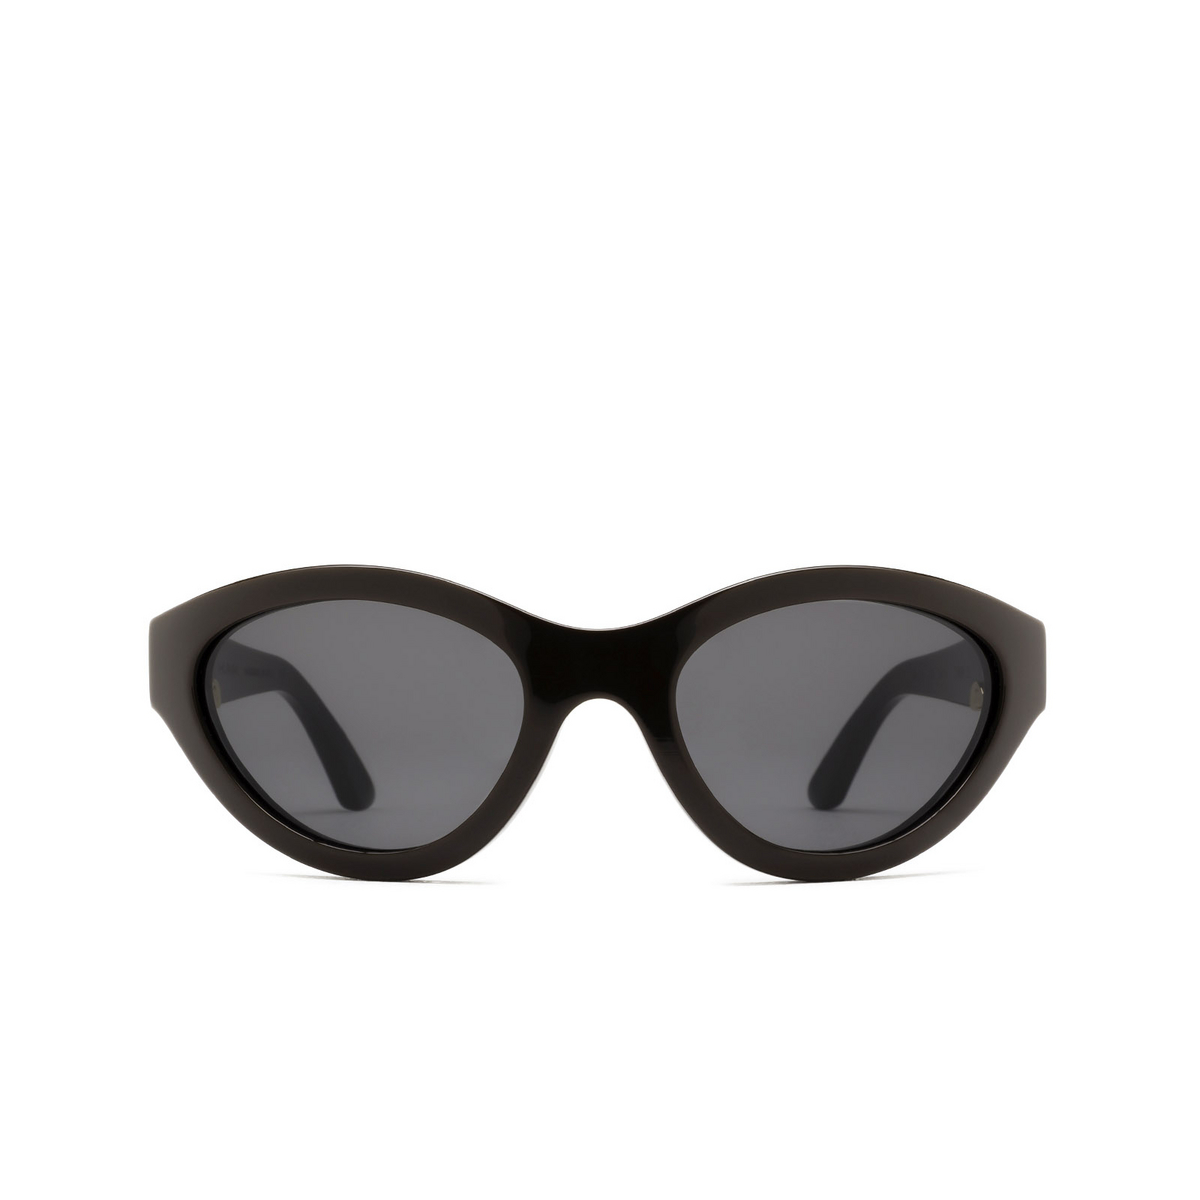 Huma LINDA Sunglasses 22 Chocolate - front view